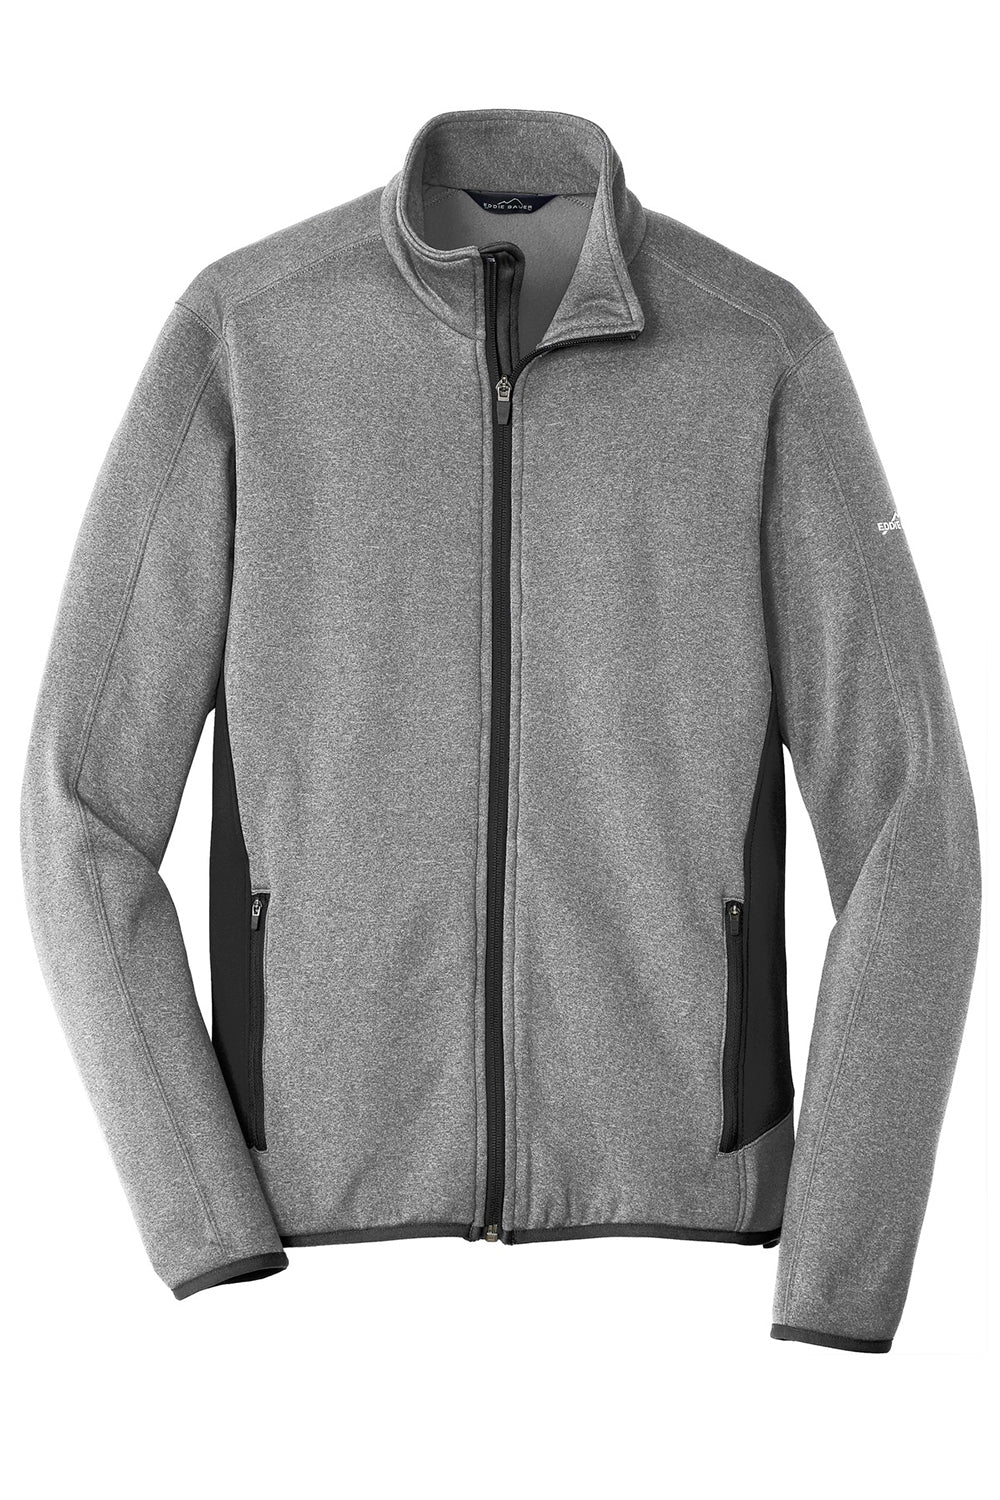 Eddie Bauer EB238 Mens Full Zip Fleece Jacket Heather Grey Flat Front